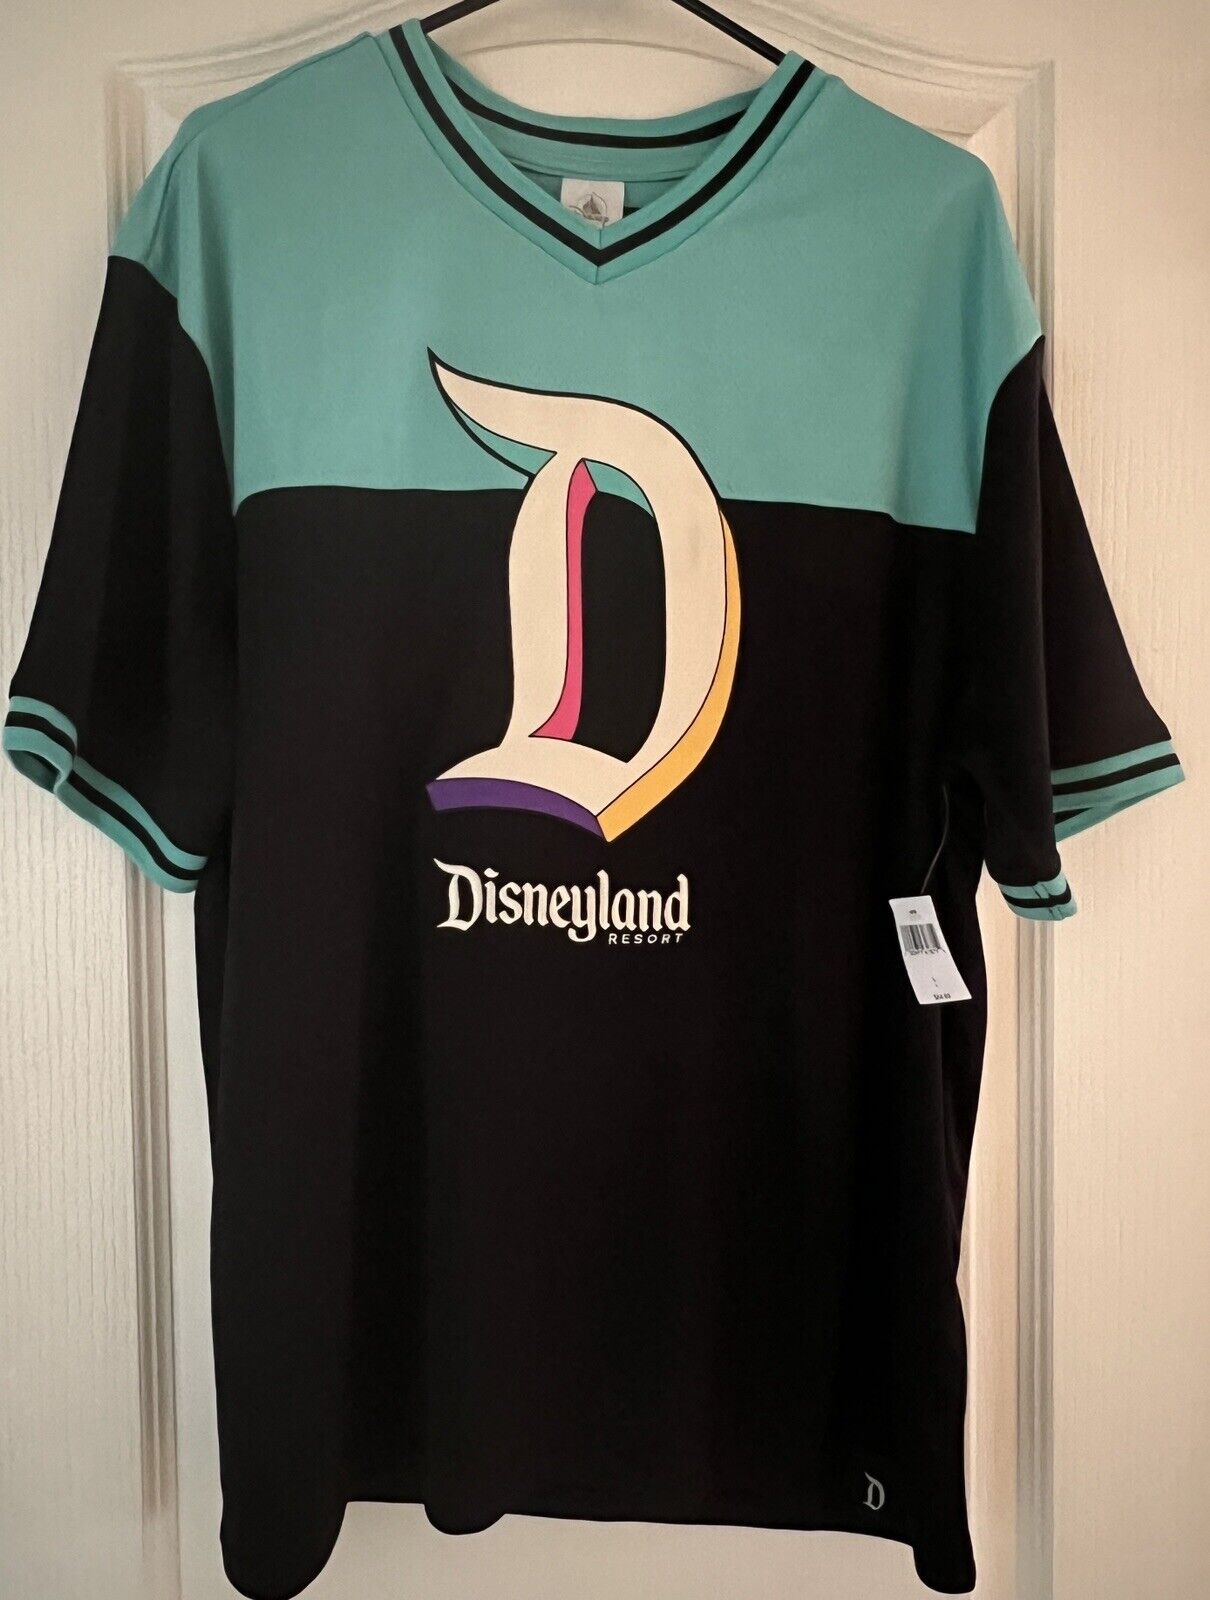 Disneyland Resort Big D Logo Color Block Baseball Jersey Teal Black Short Sleeve